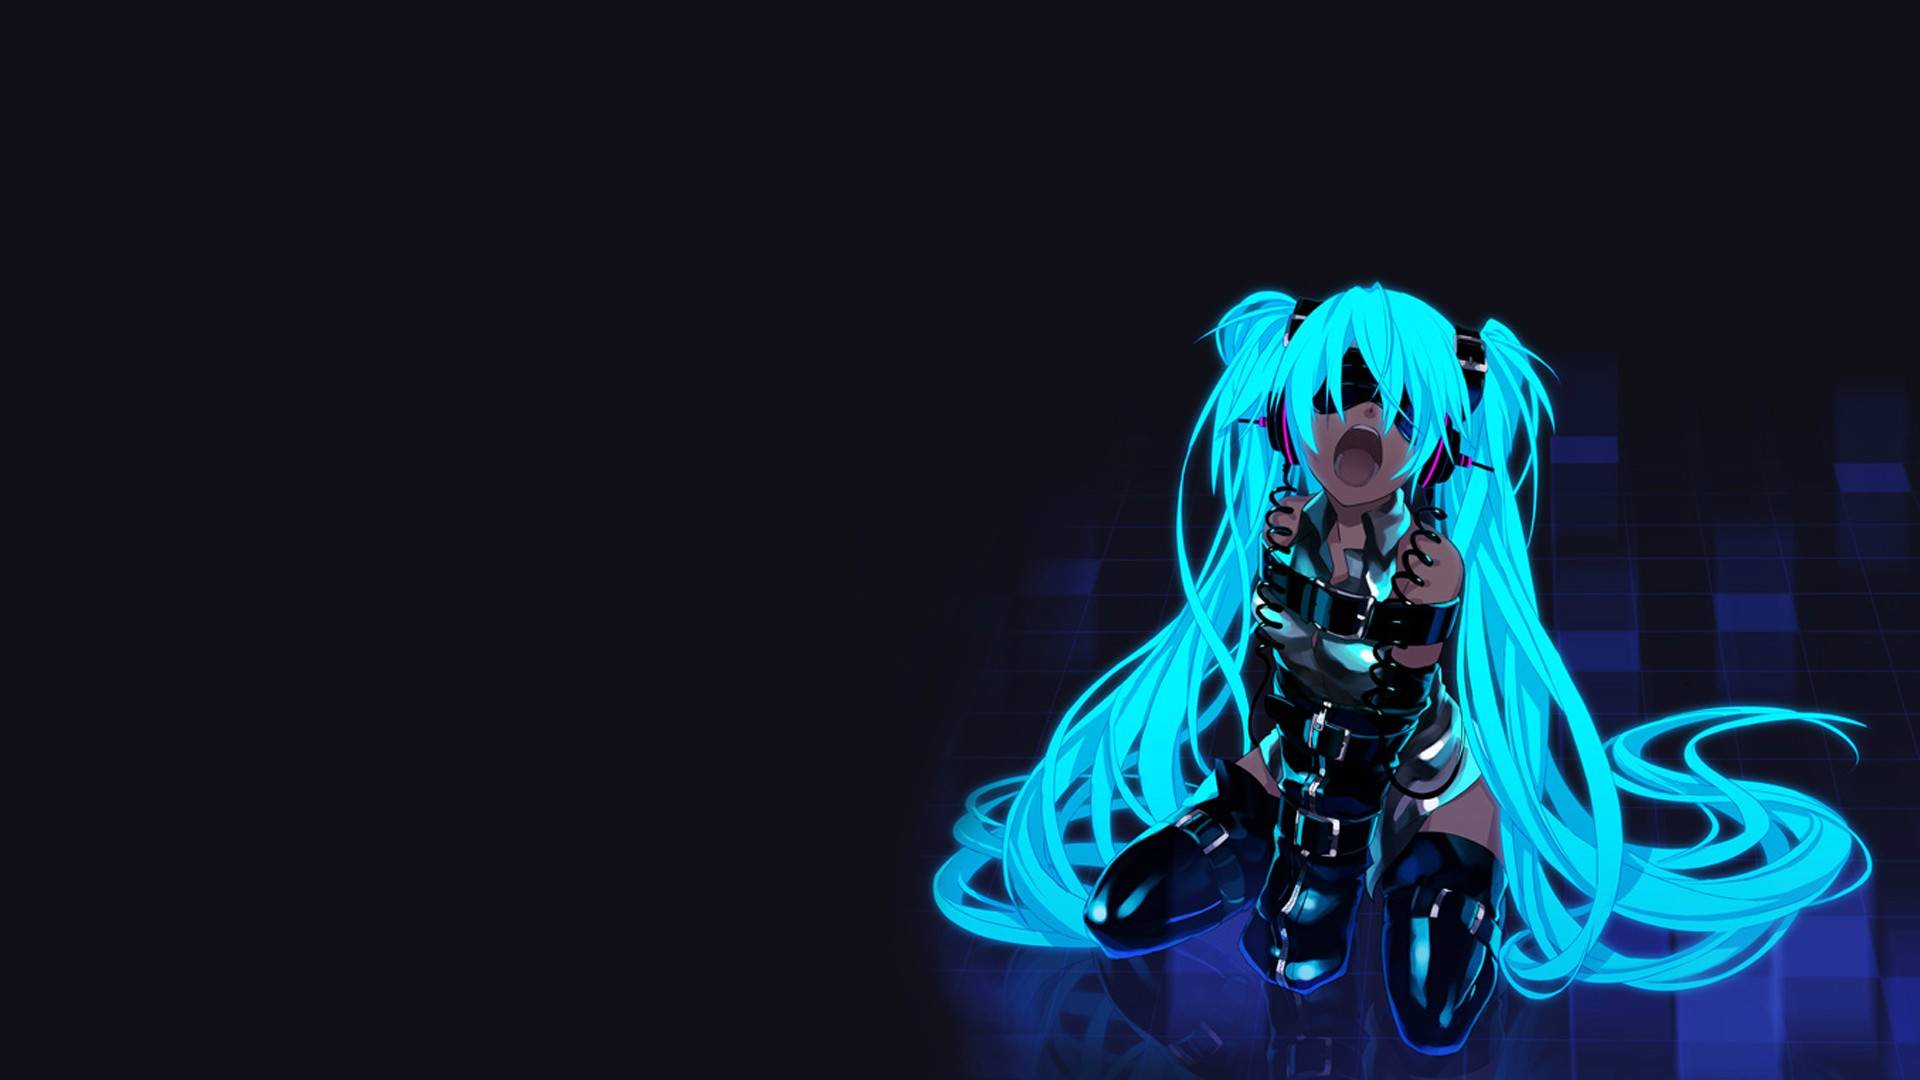 Stunning Neon Anime Image